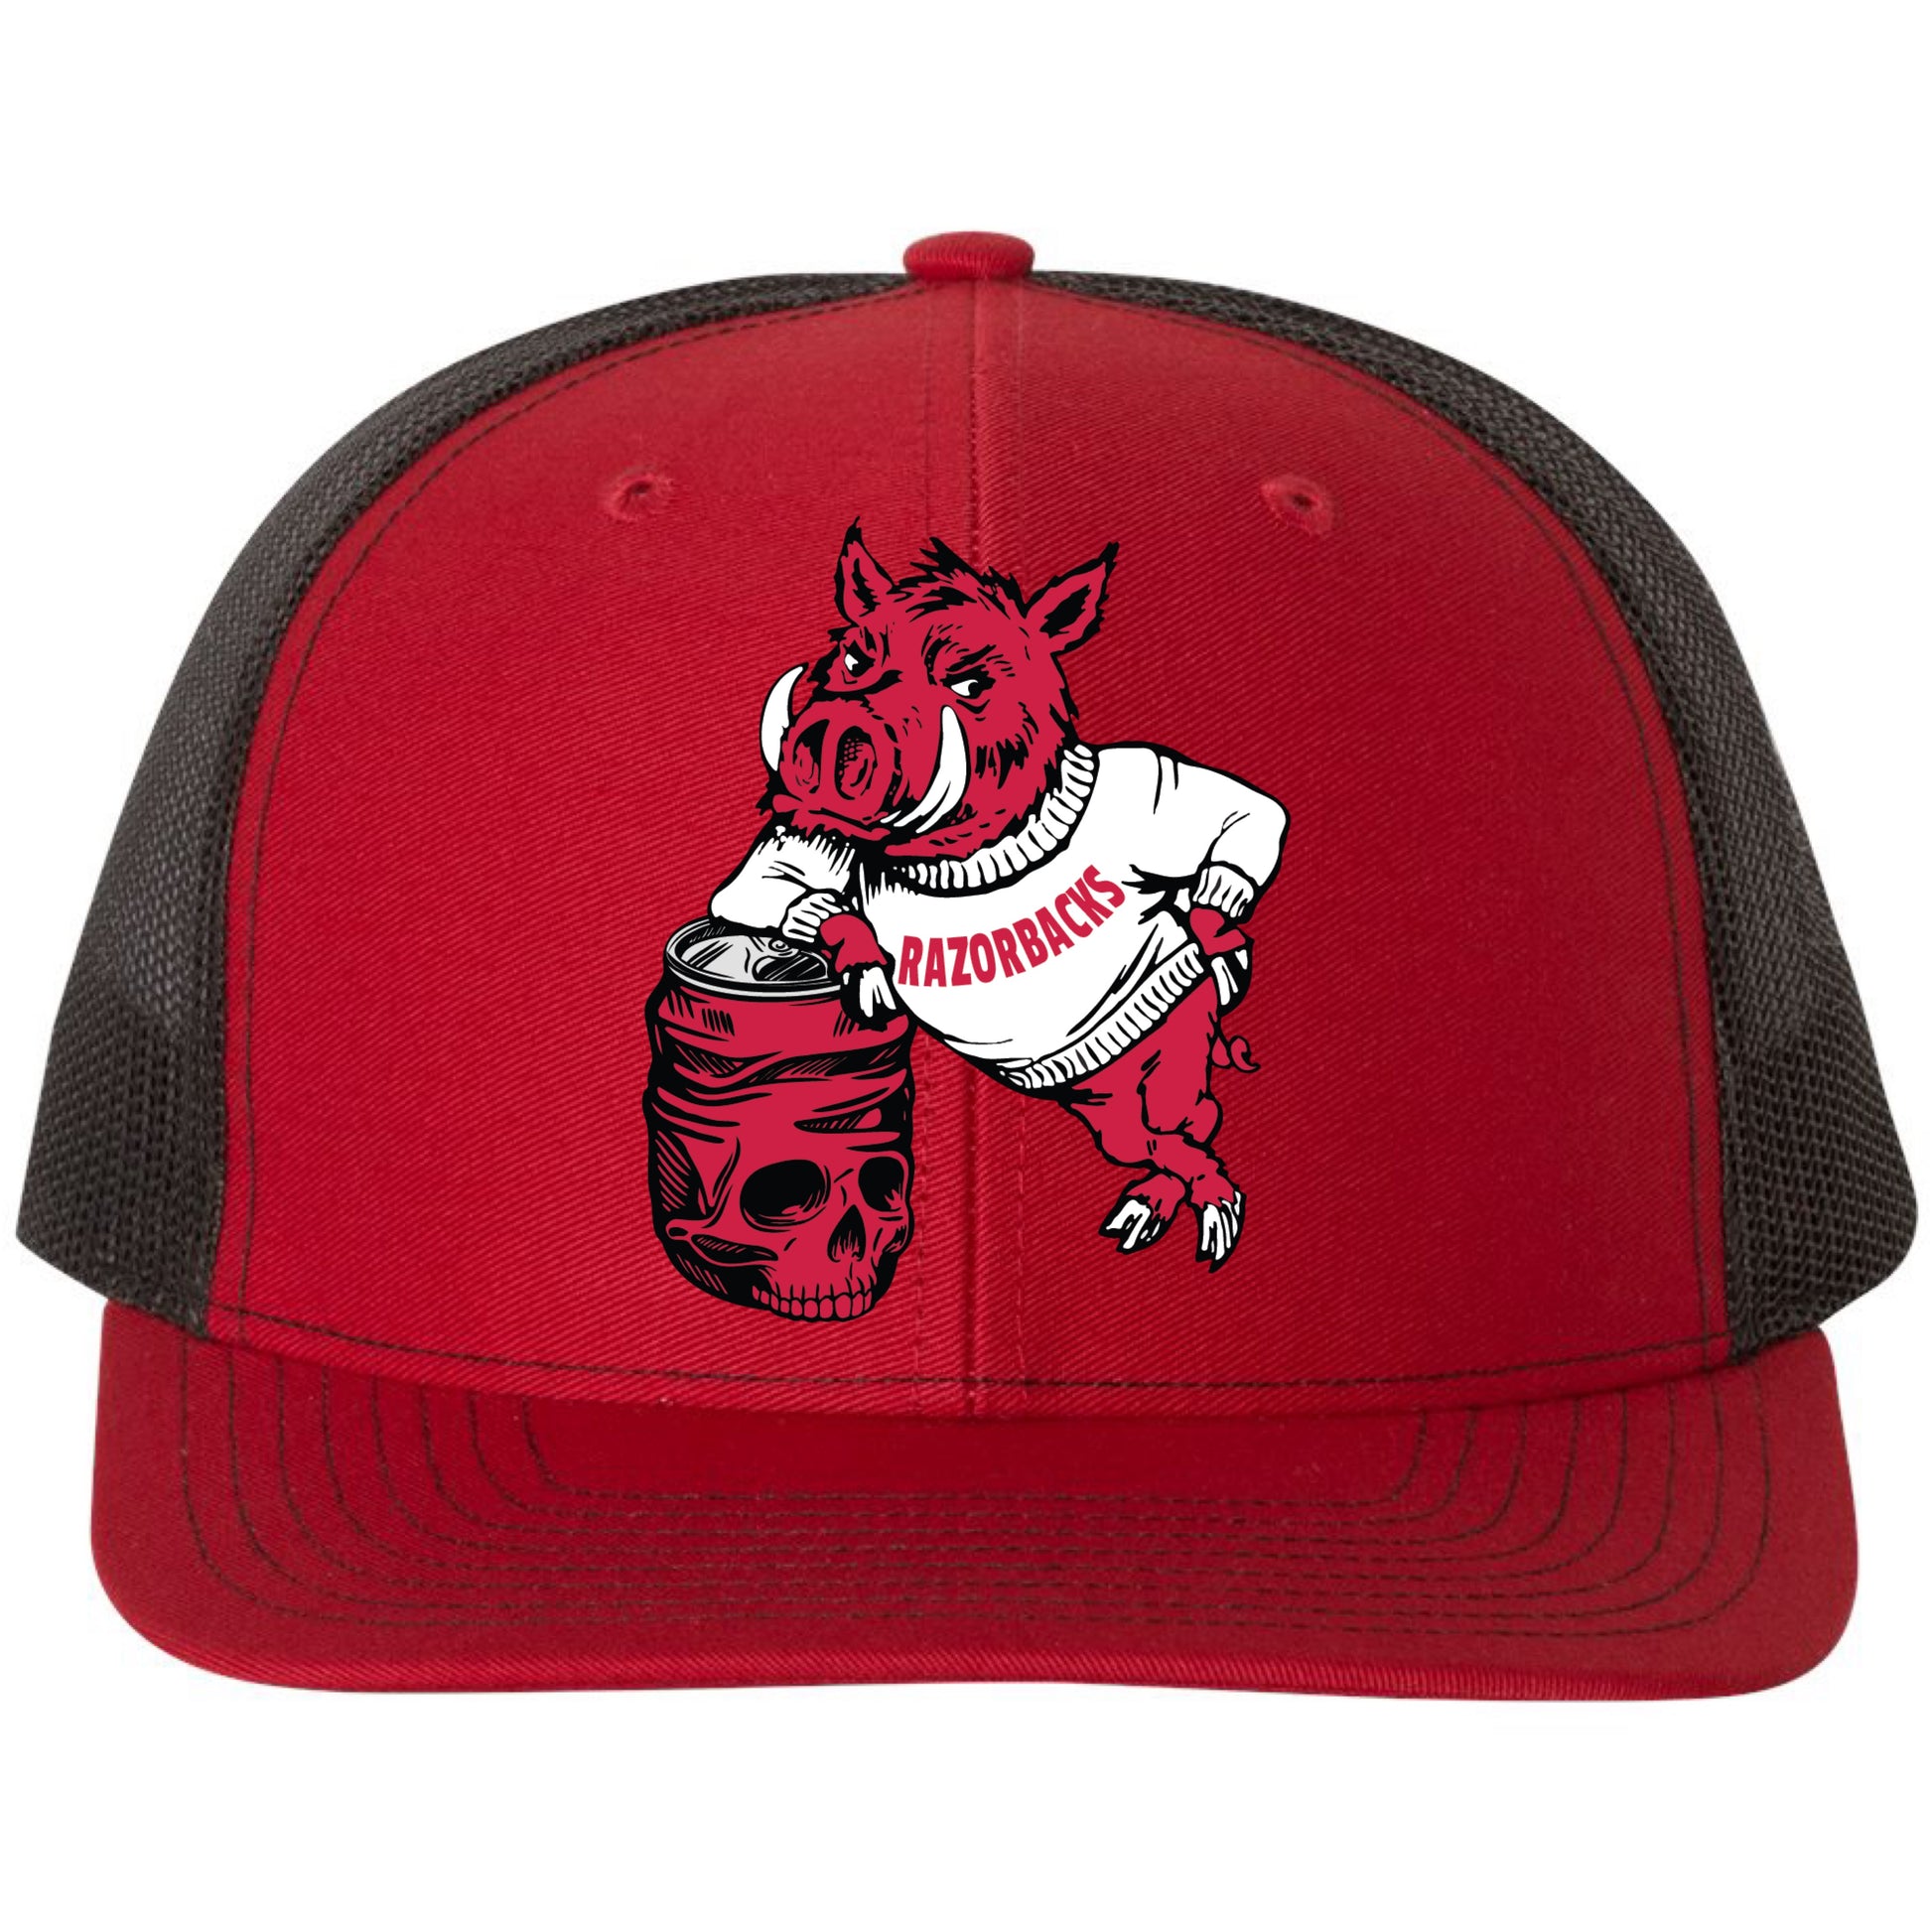 Arkansas Razorbacks- Skull Crushers 3D Snapback Trucker Hat- Red/ Black - Ten Gallon Hat Co.